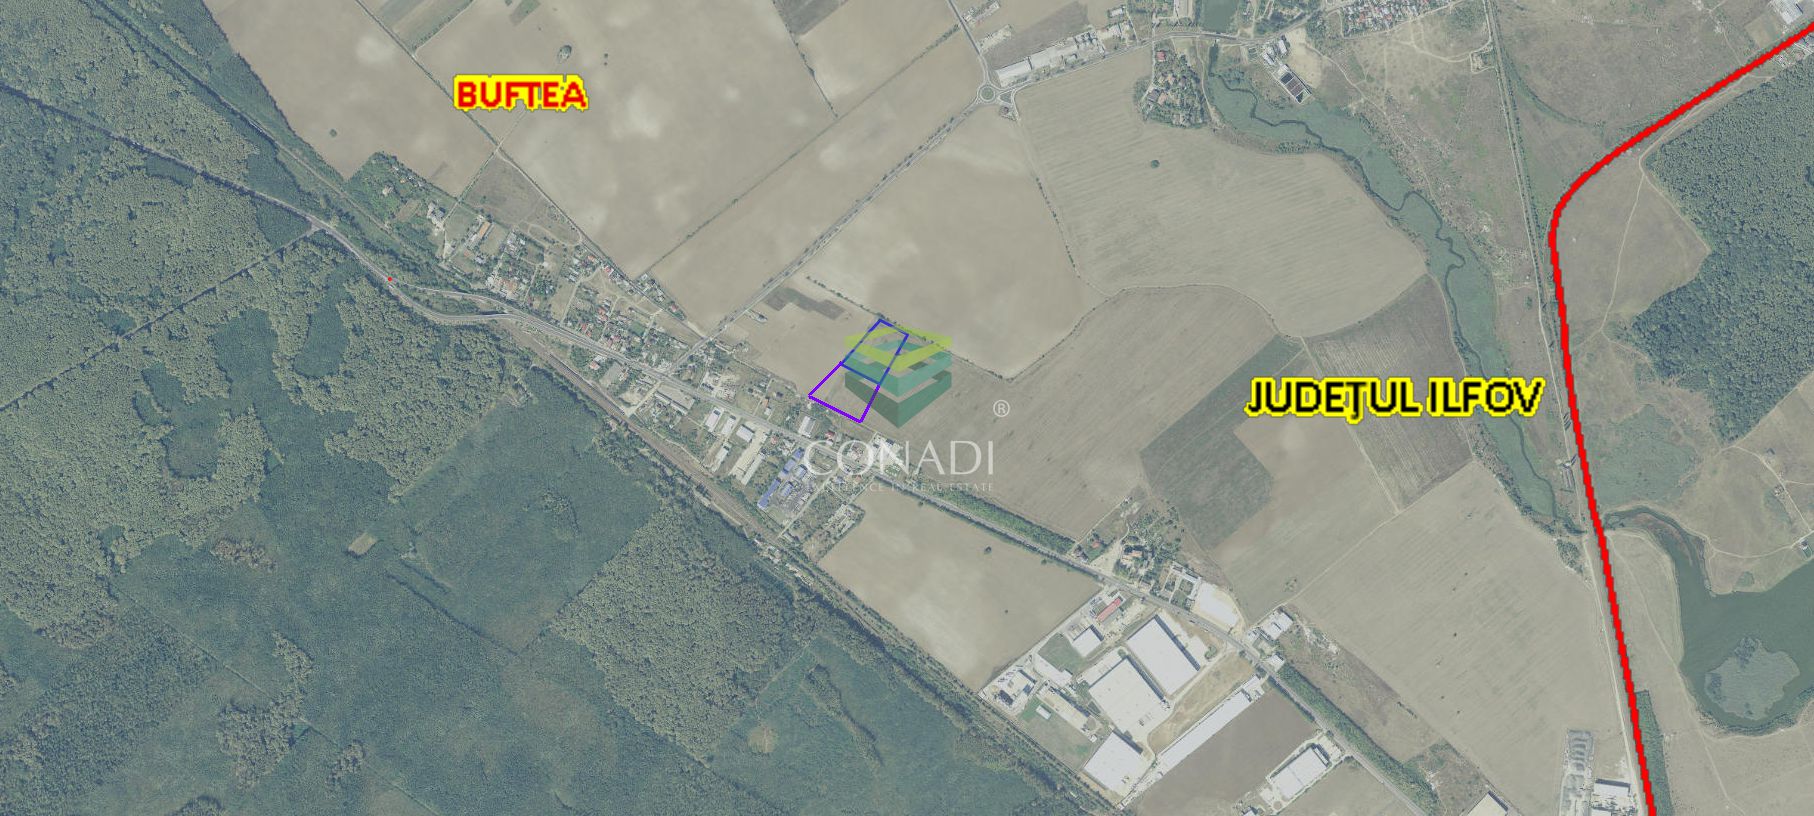 Land for sale - suitable for industrial constructions - Buftea area